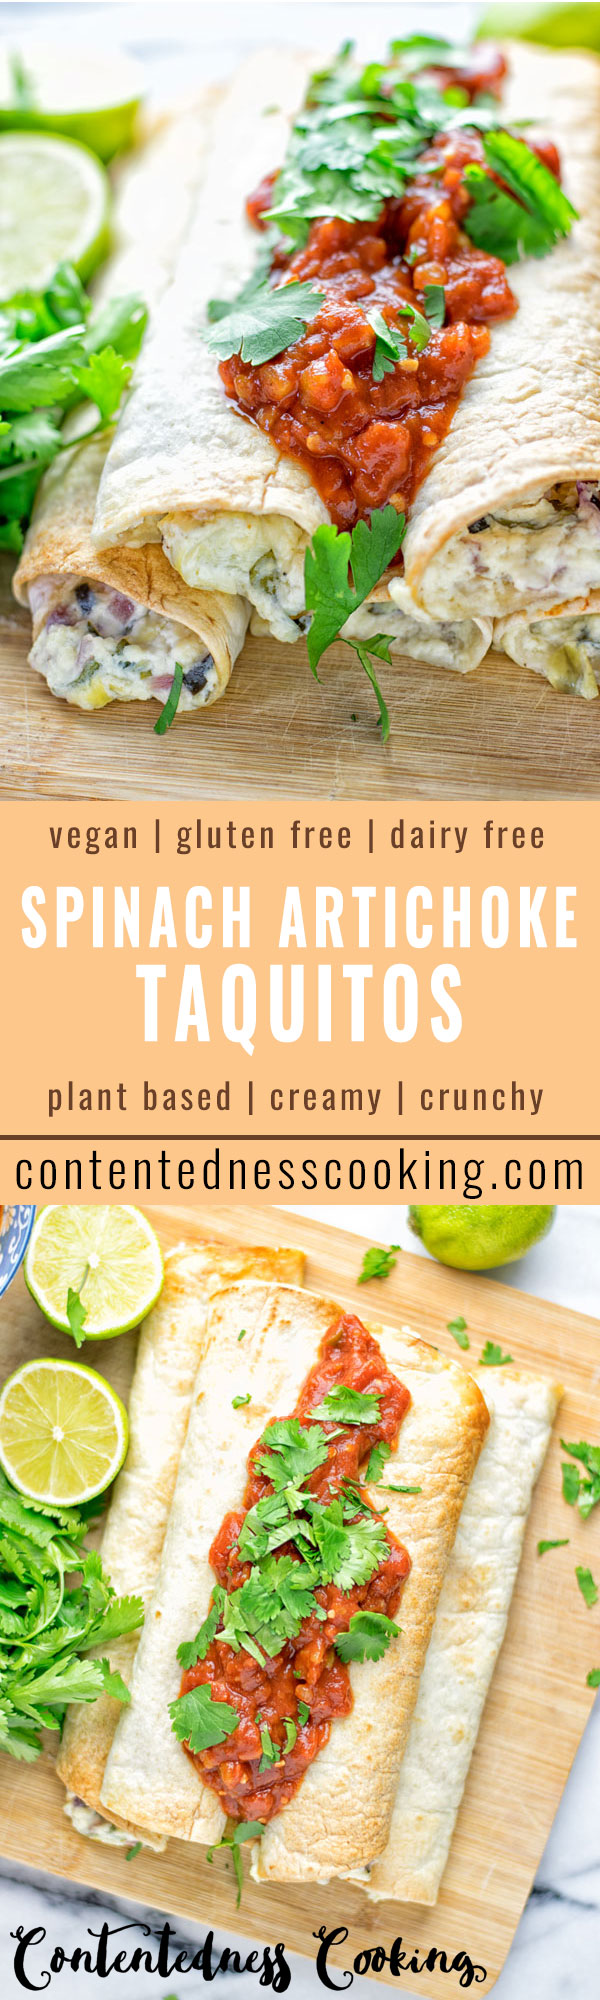 Spinach Artichoke Taquitos | #vegan #glutenfree #contentednesscooking